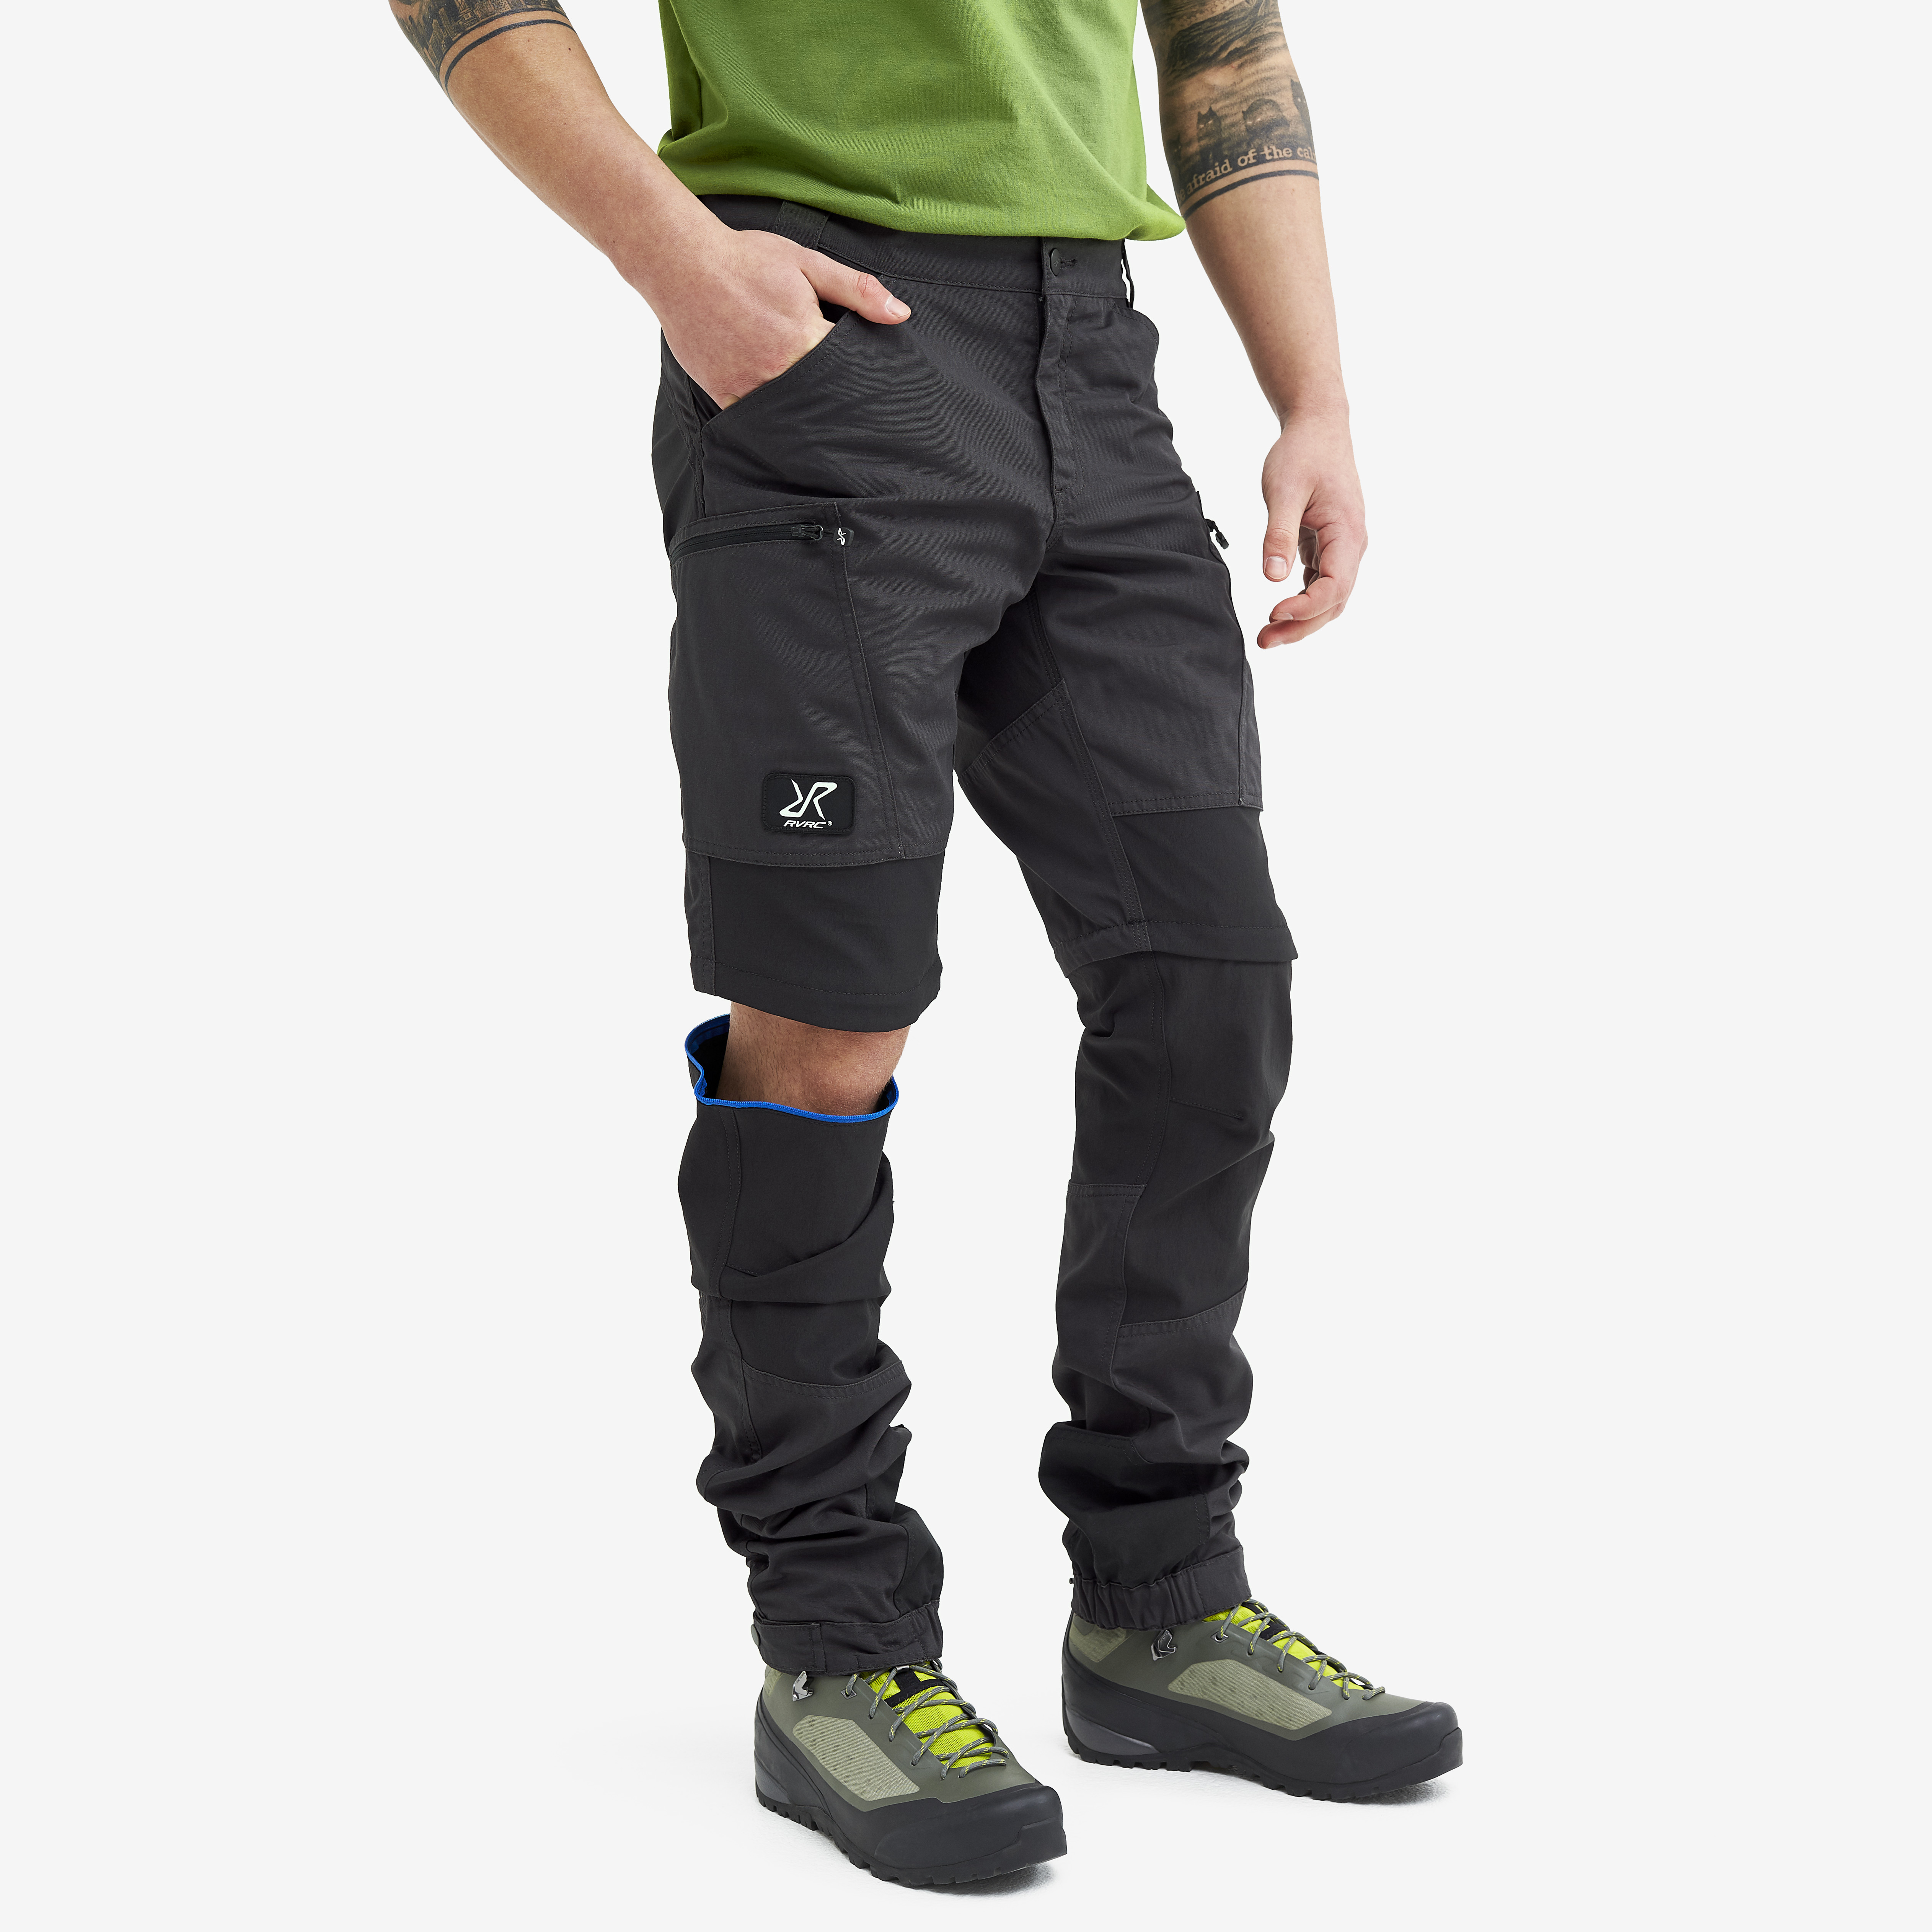 Nordwand Pro Zip-off hiking pants for men in dark grey